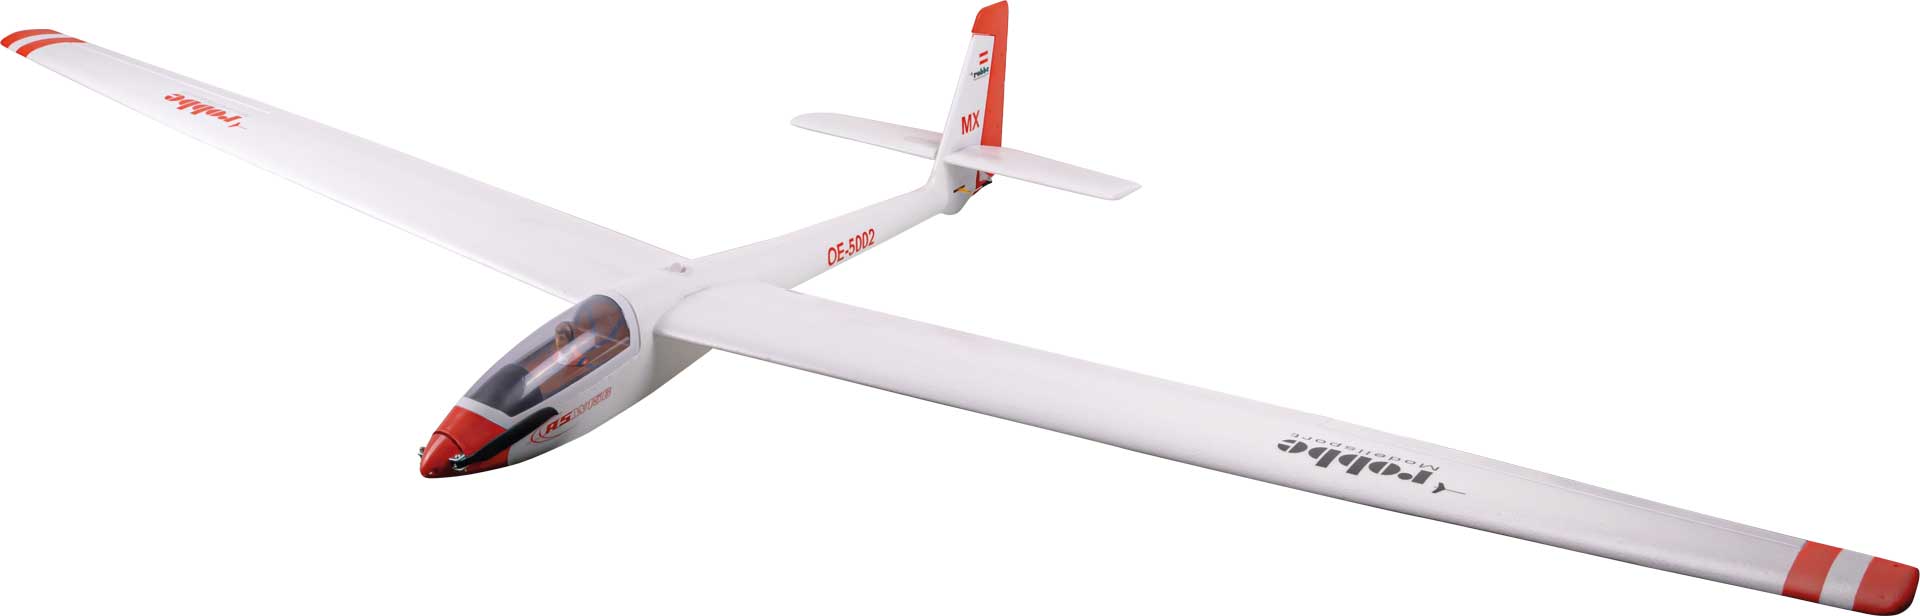 Robbe Modellsport ASW 15B PNP aus EPO Elektrosegelflugzeug